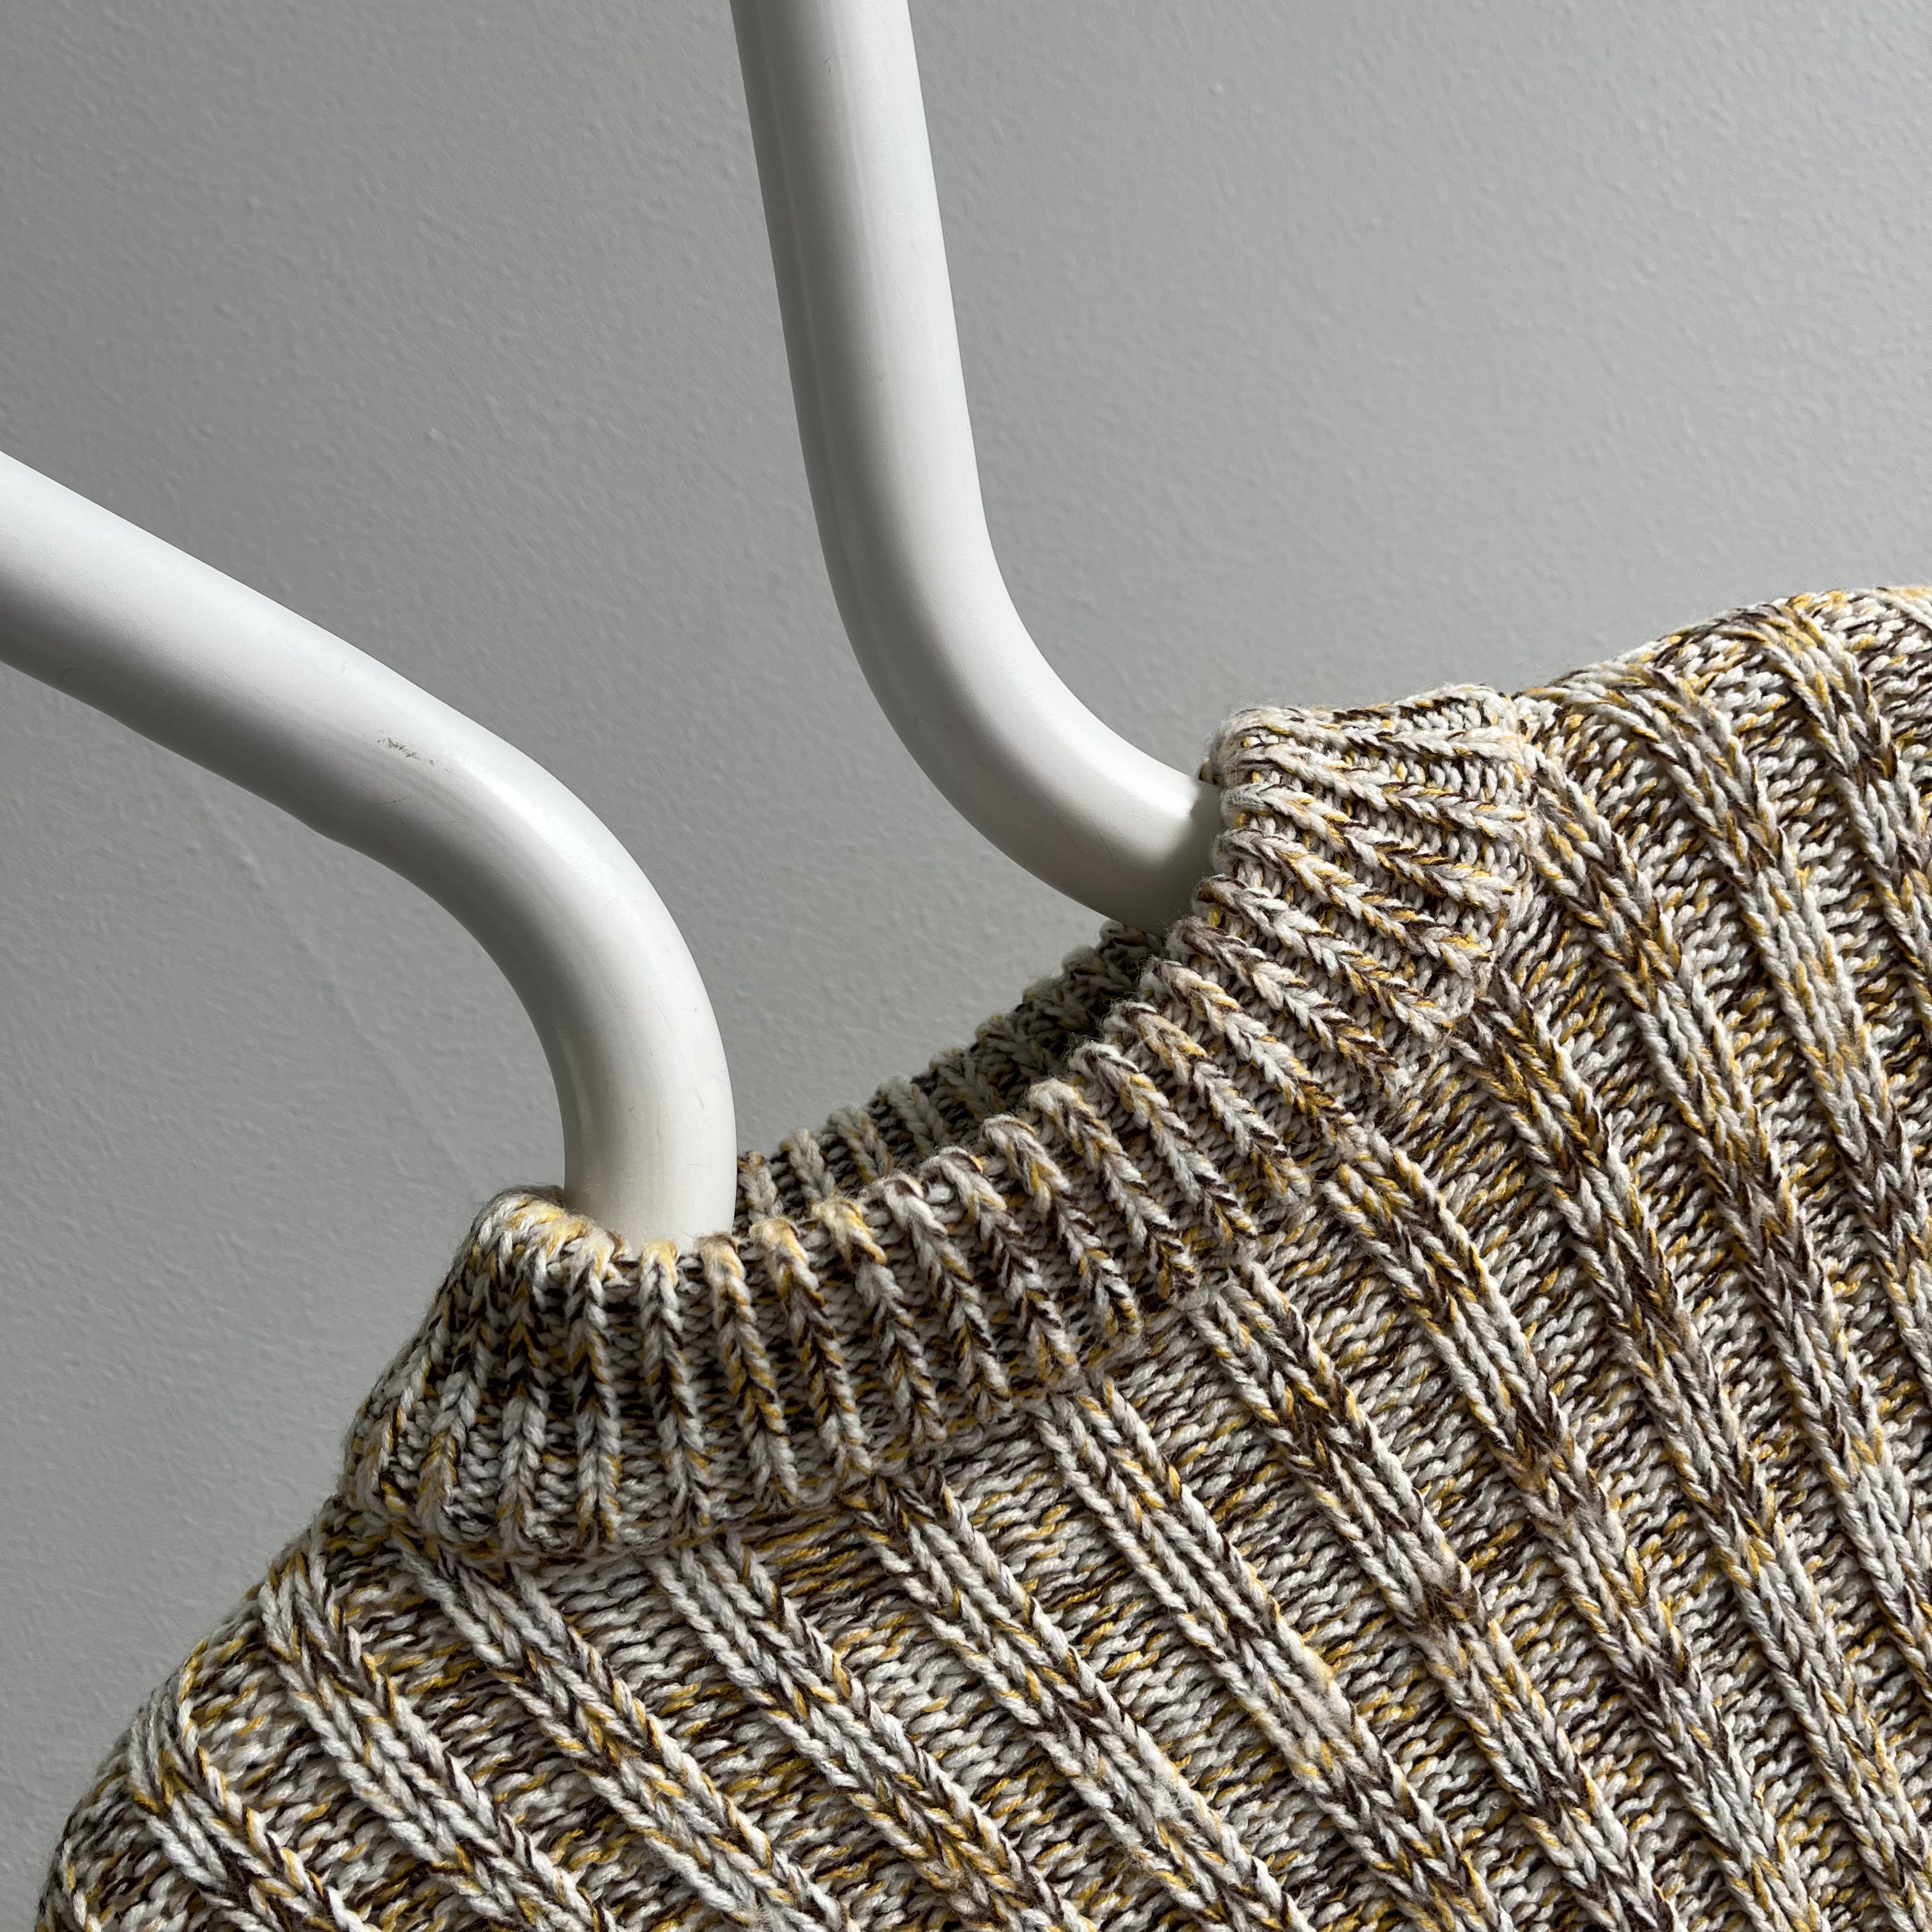 1970s Mock Neck Slouchy Acrlyic Knit Sweater